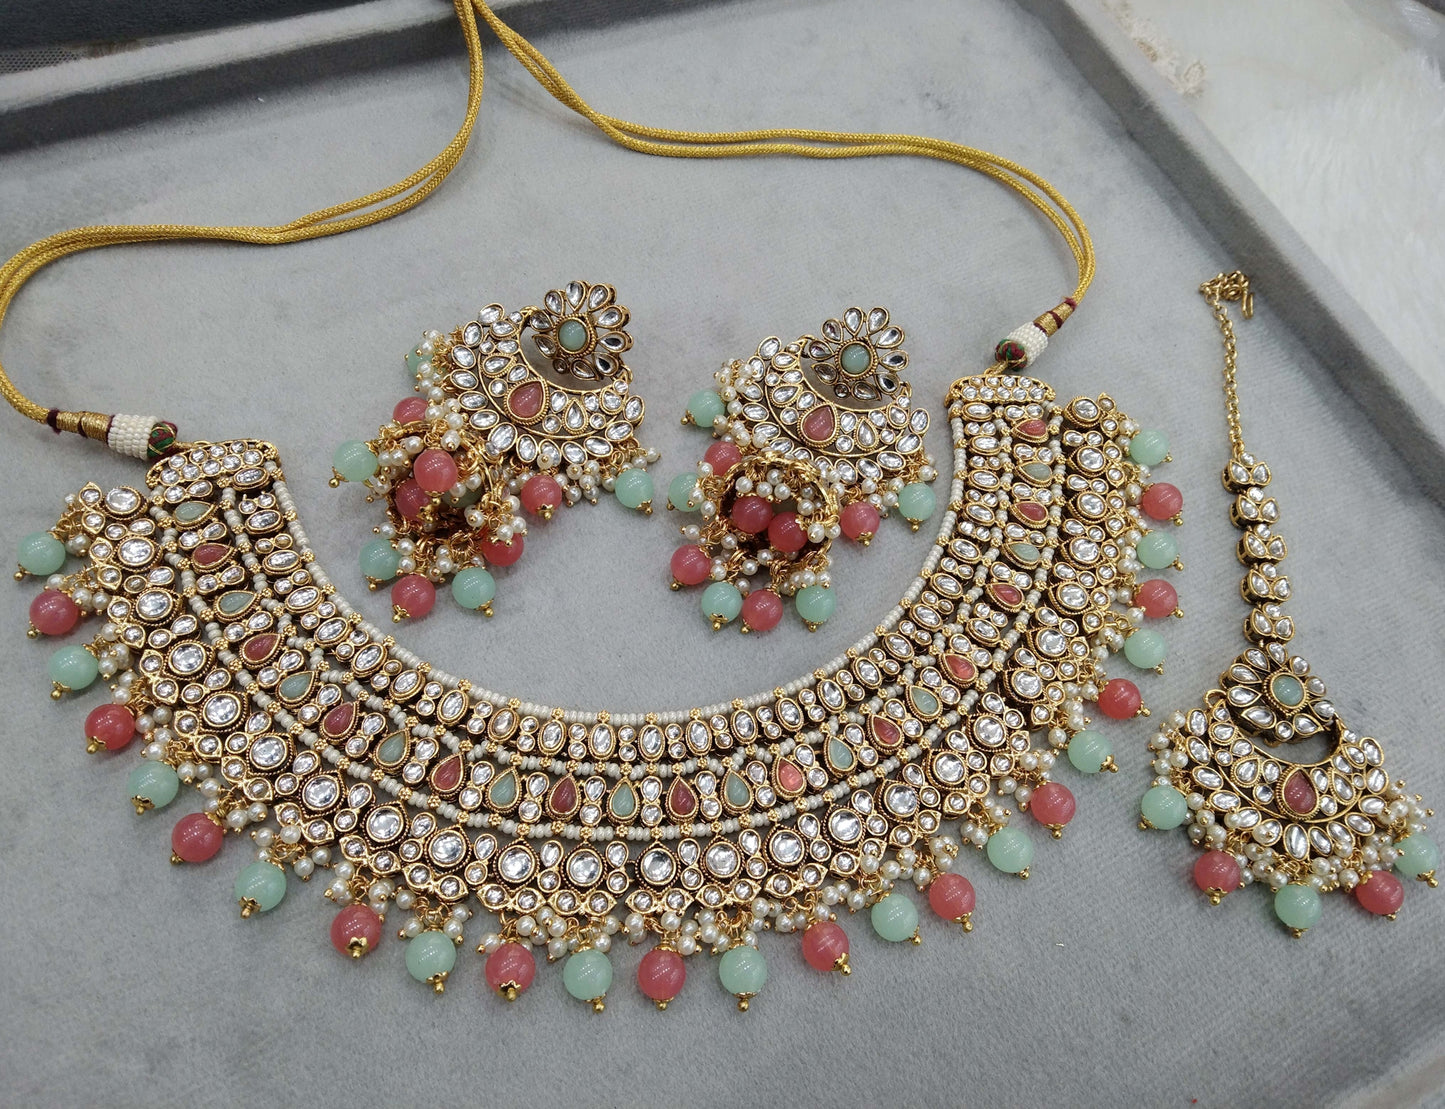 Gold Gajjri Mint Kundan Necklace nili indian jewellery Set